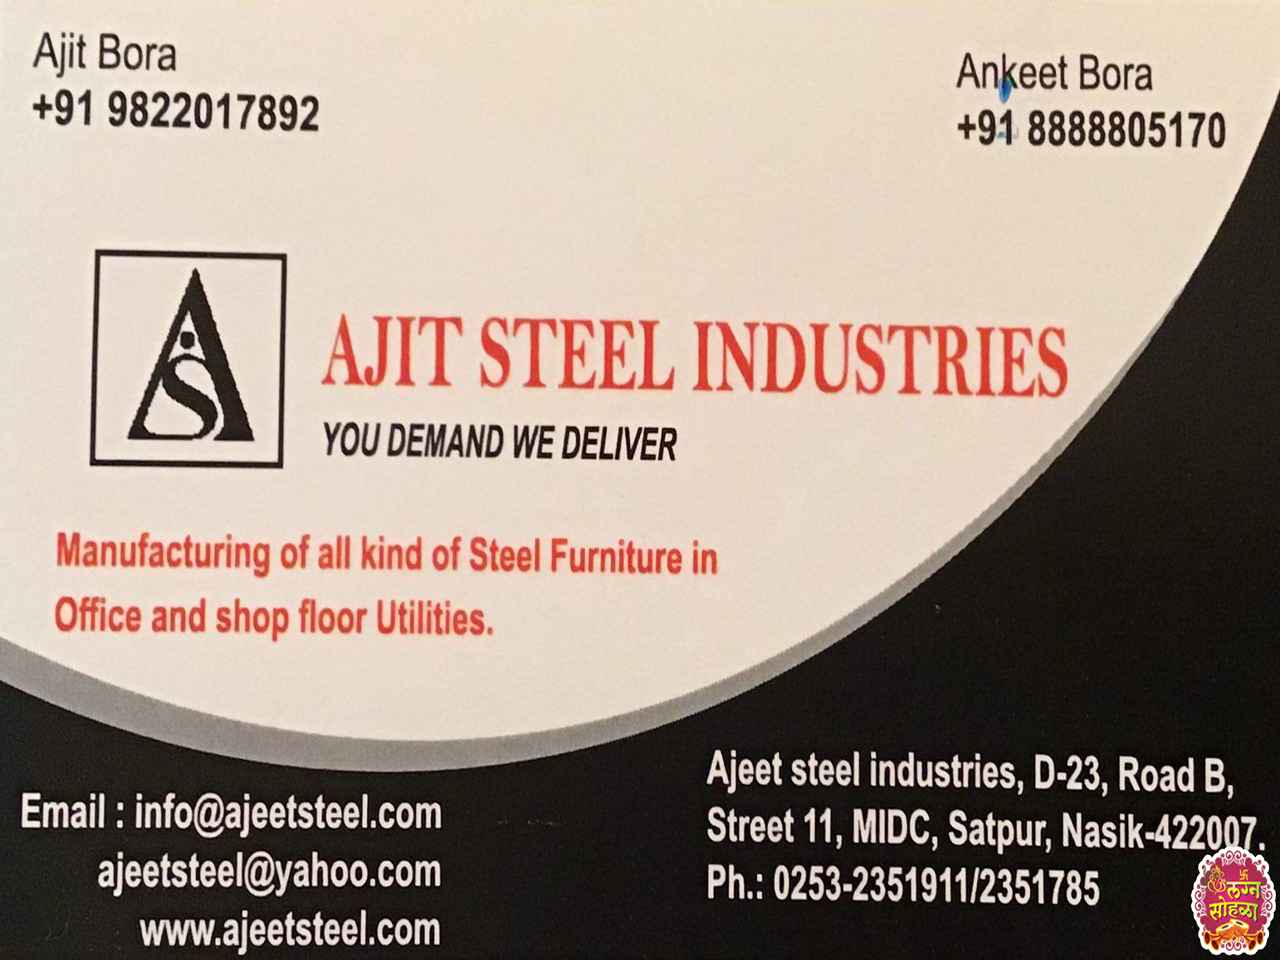 Ajit Steel Industries